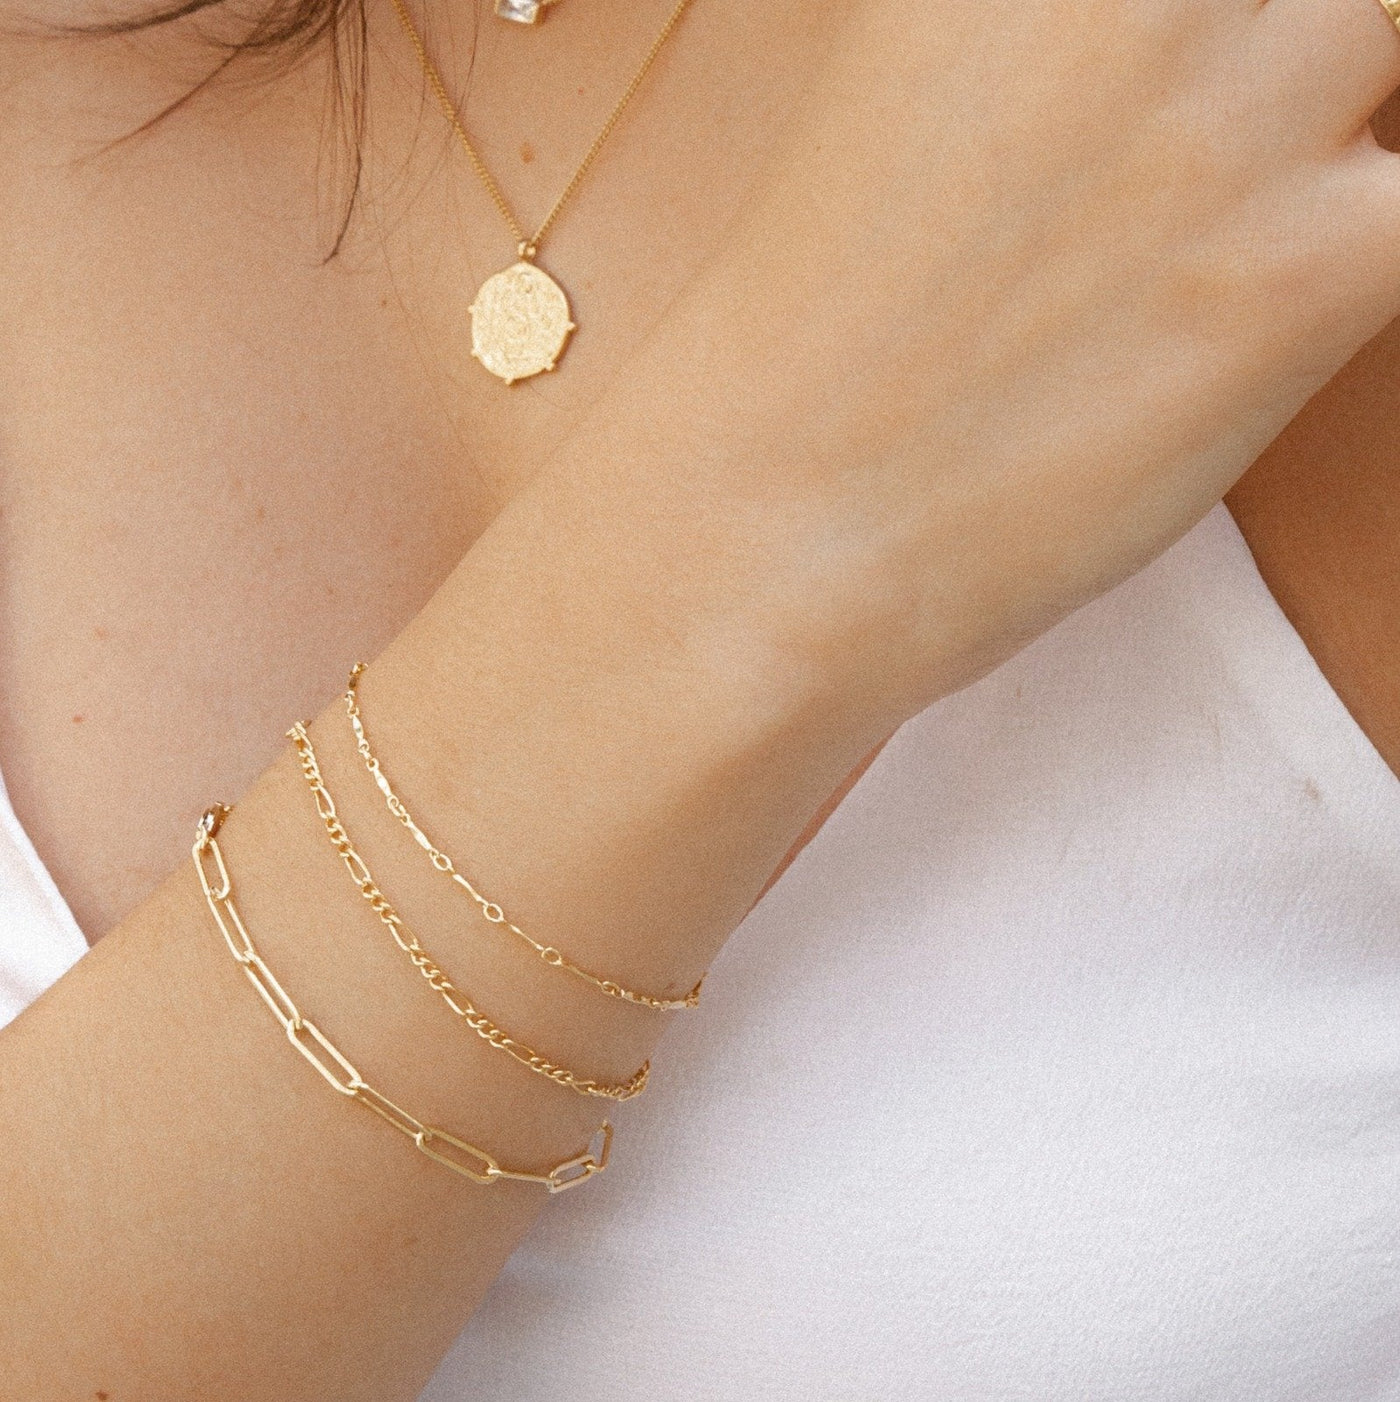 Dapped Chain Bracelet by Simple & Dainty Jewelry